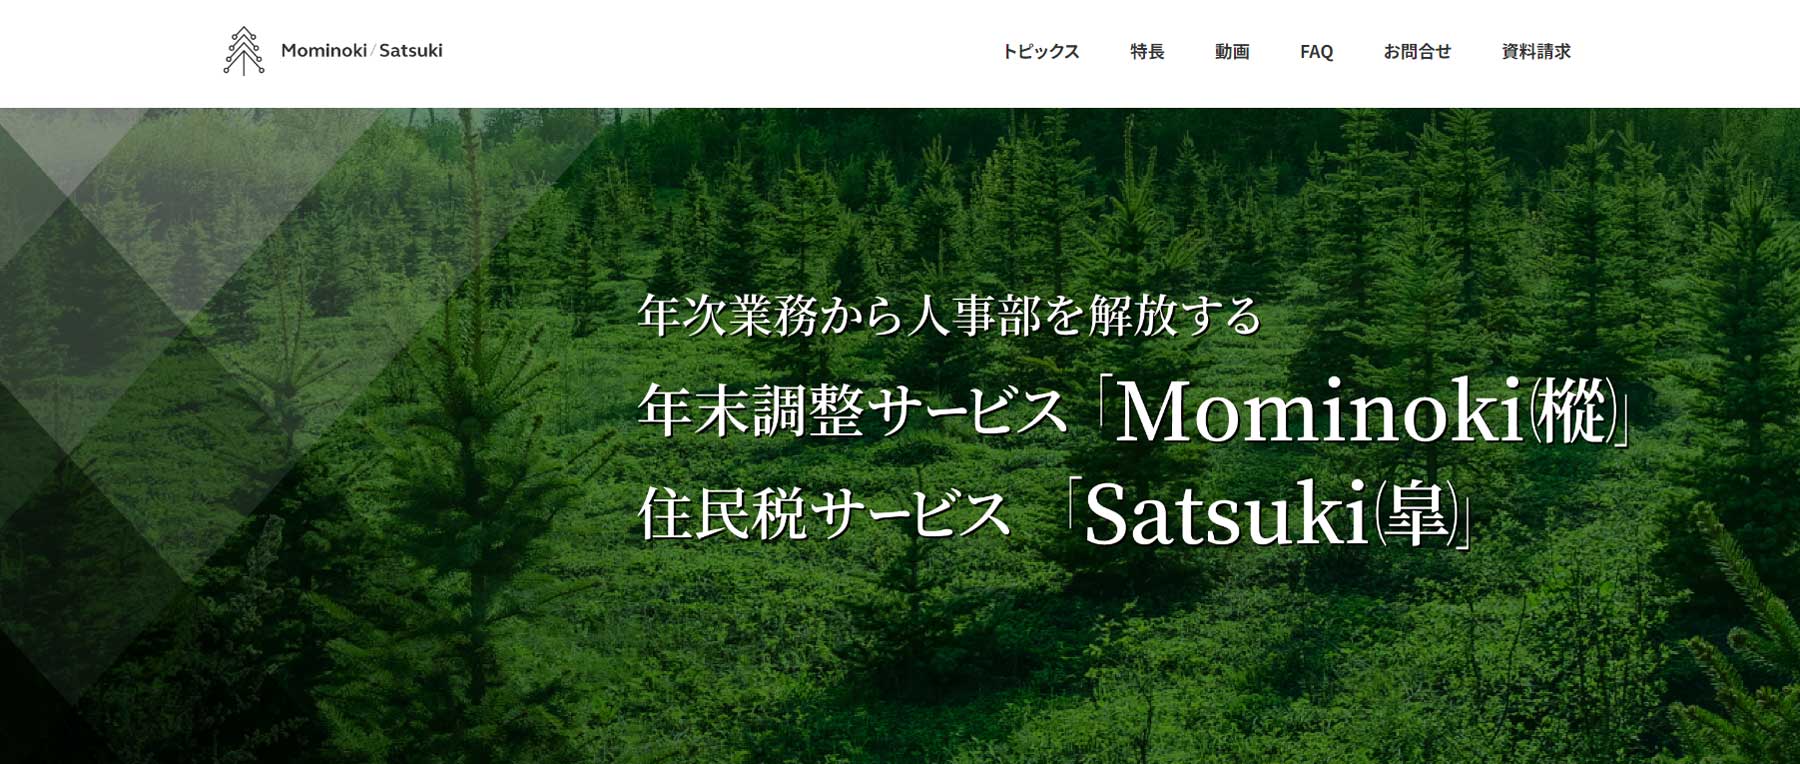 Mominoki公式Webサイト